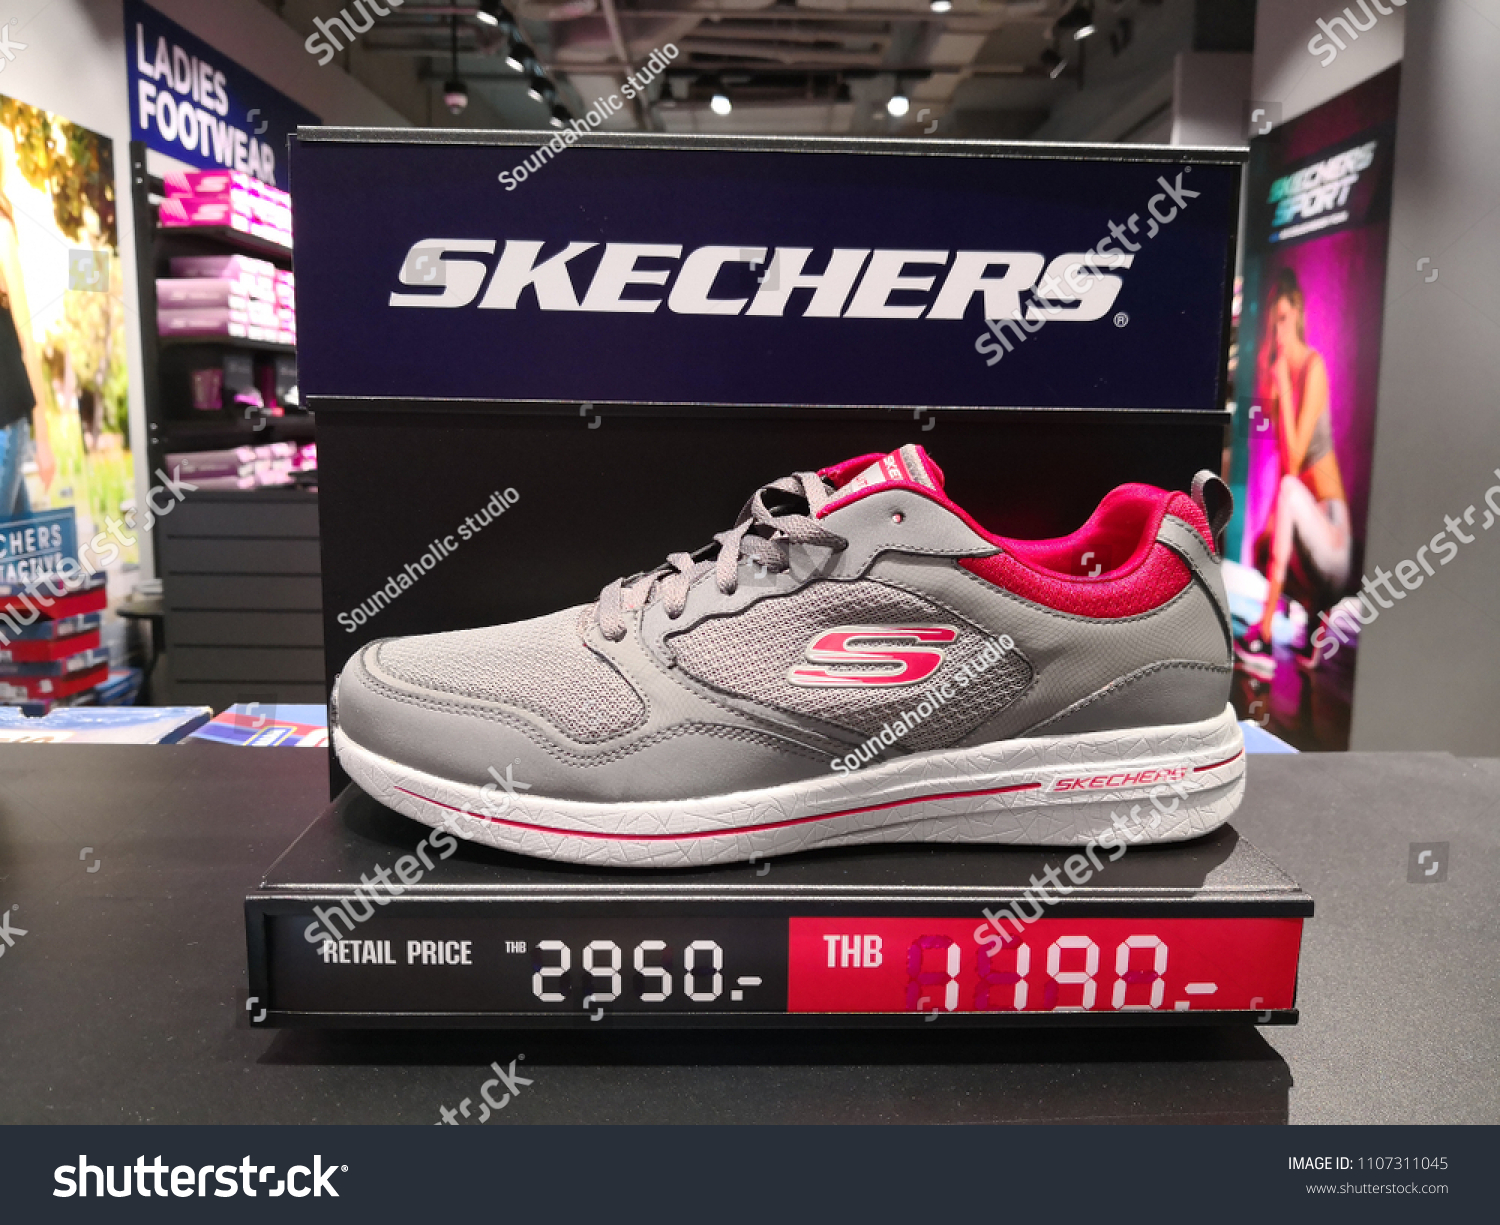 302018 Skechers Shoe Stock Photo 